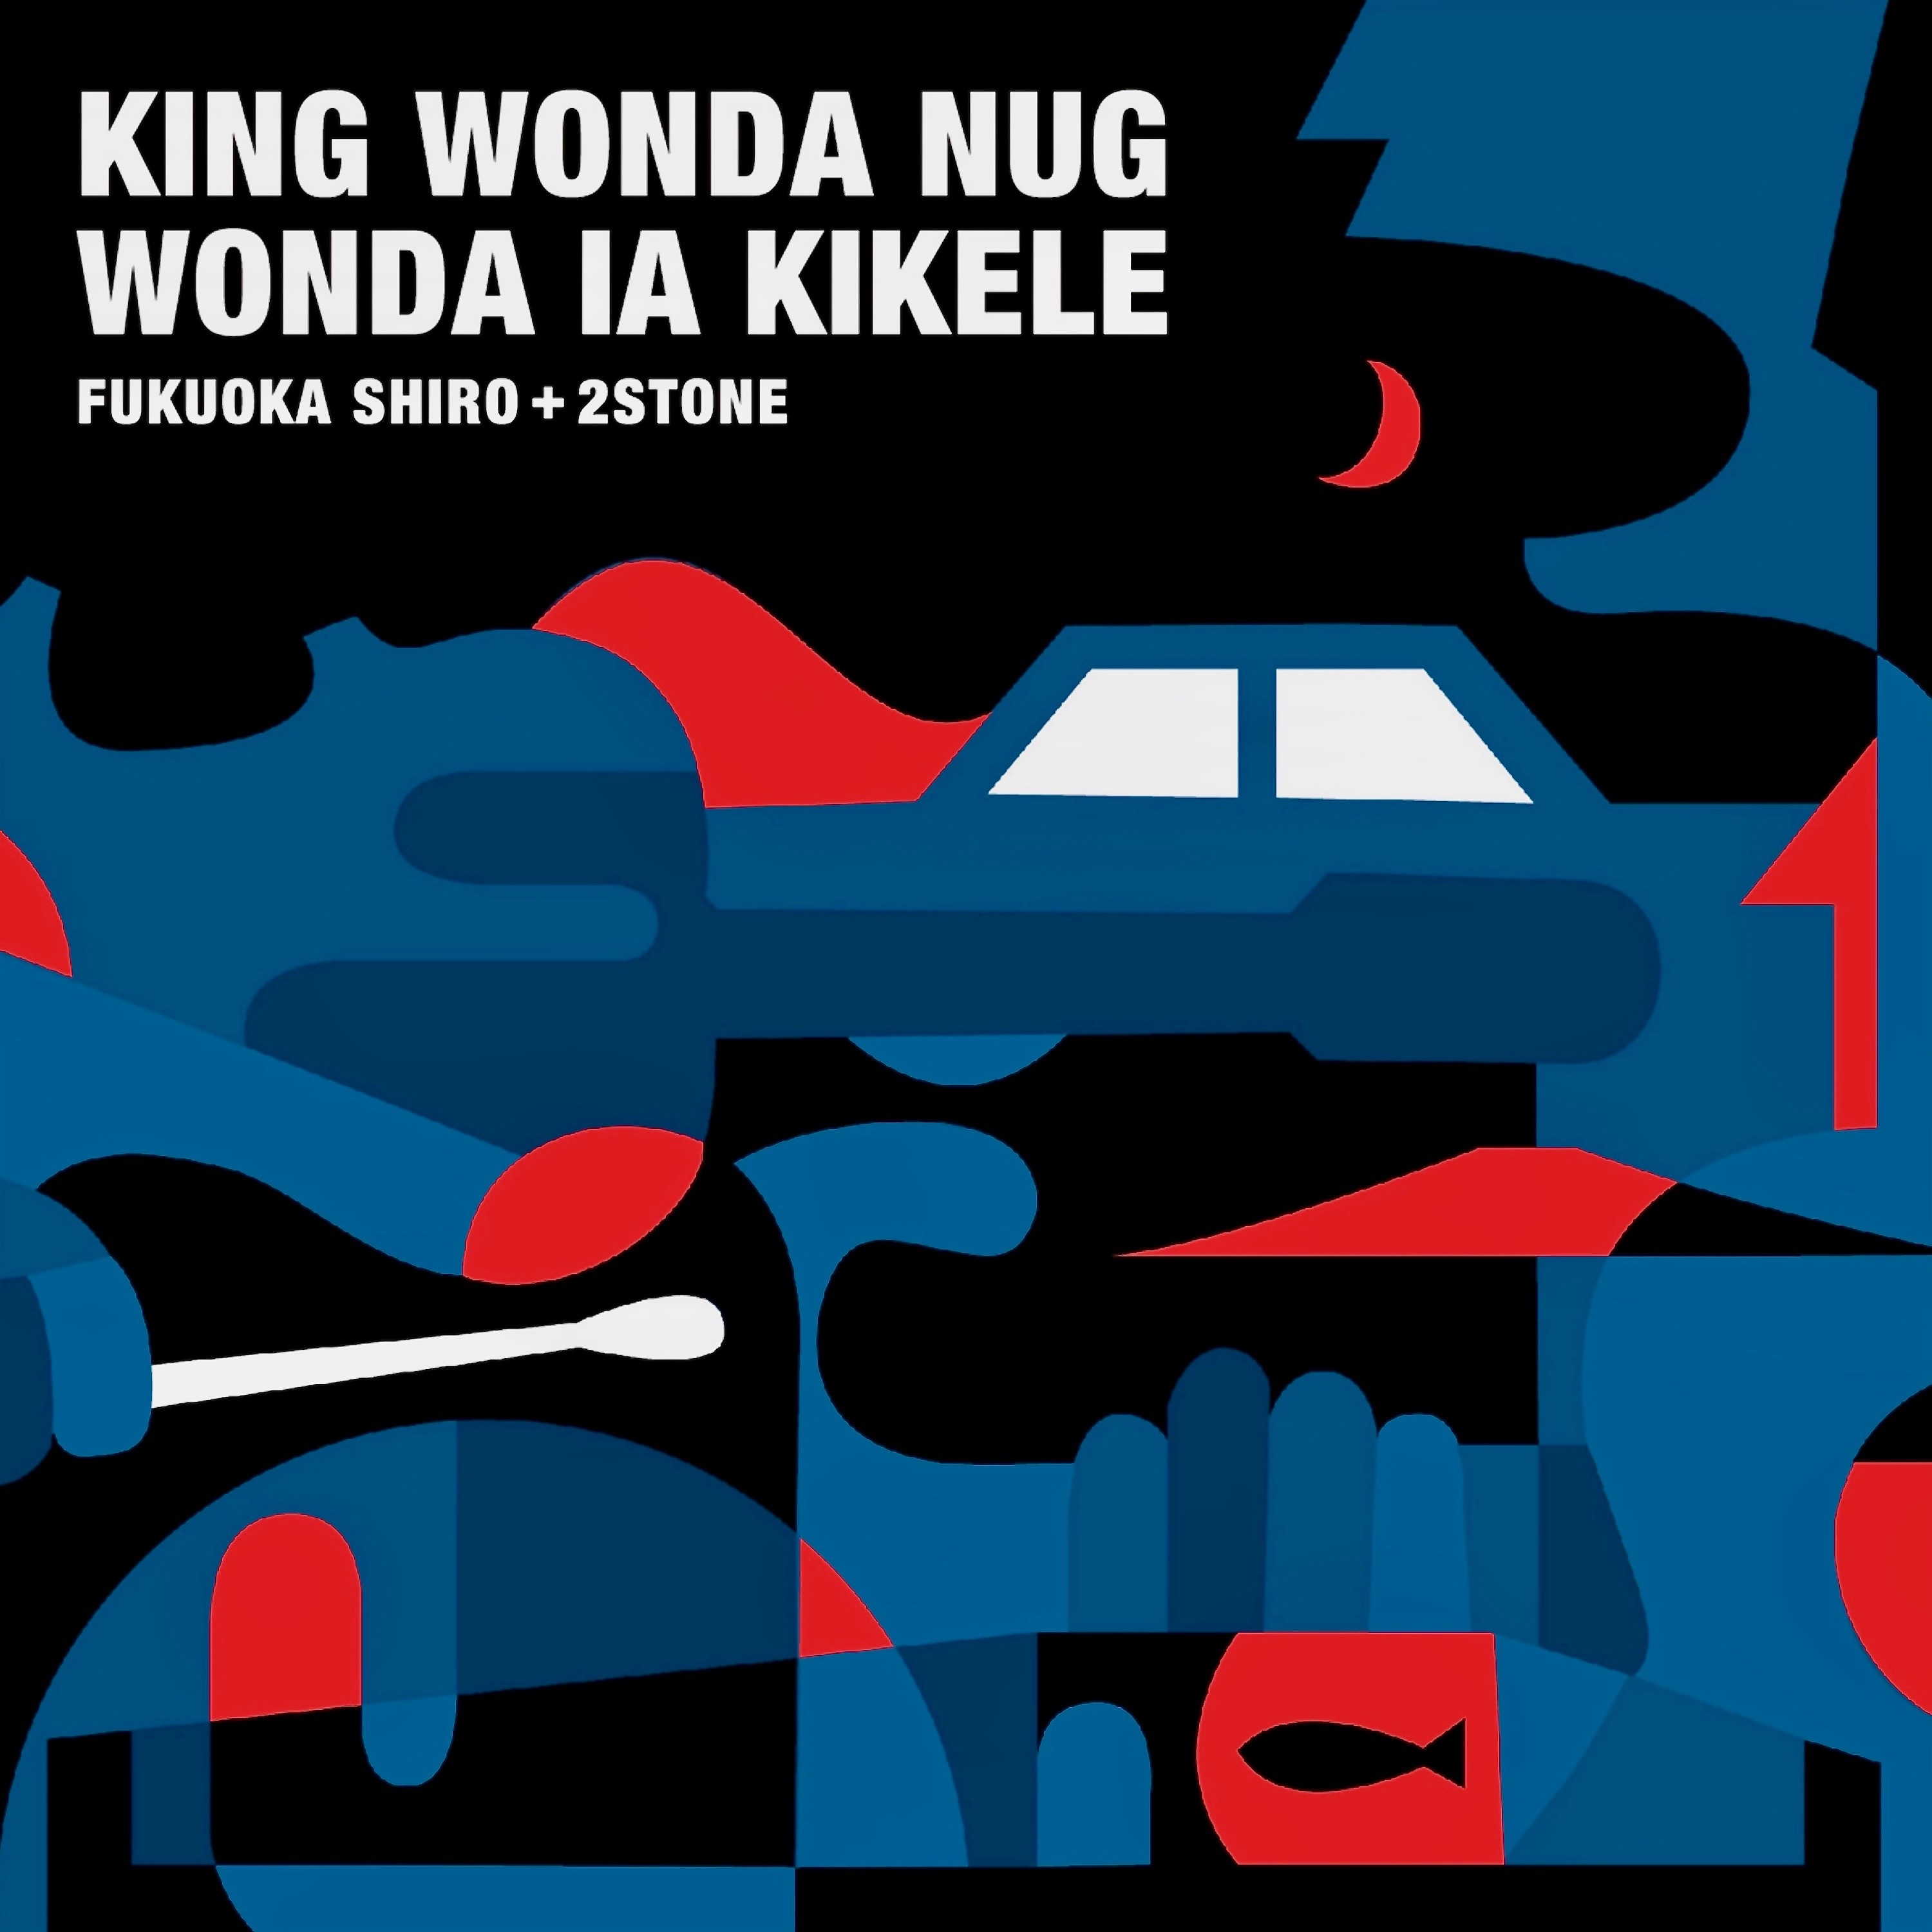 King Wonda Nug Wonda Ia Kikele